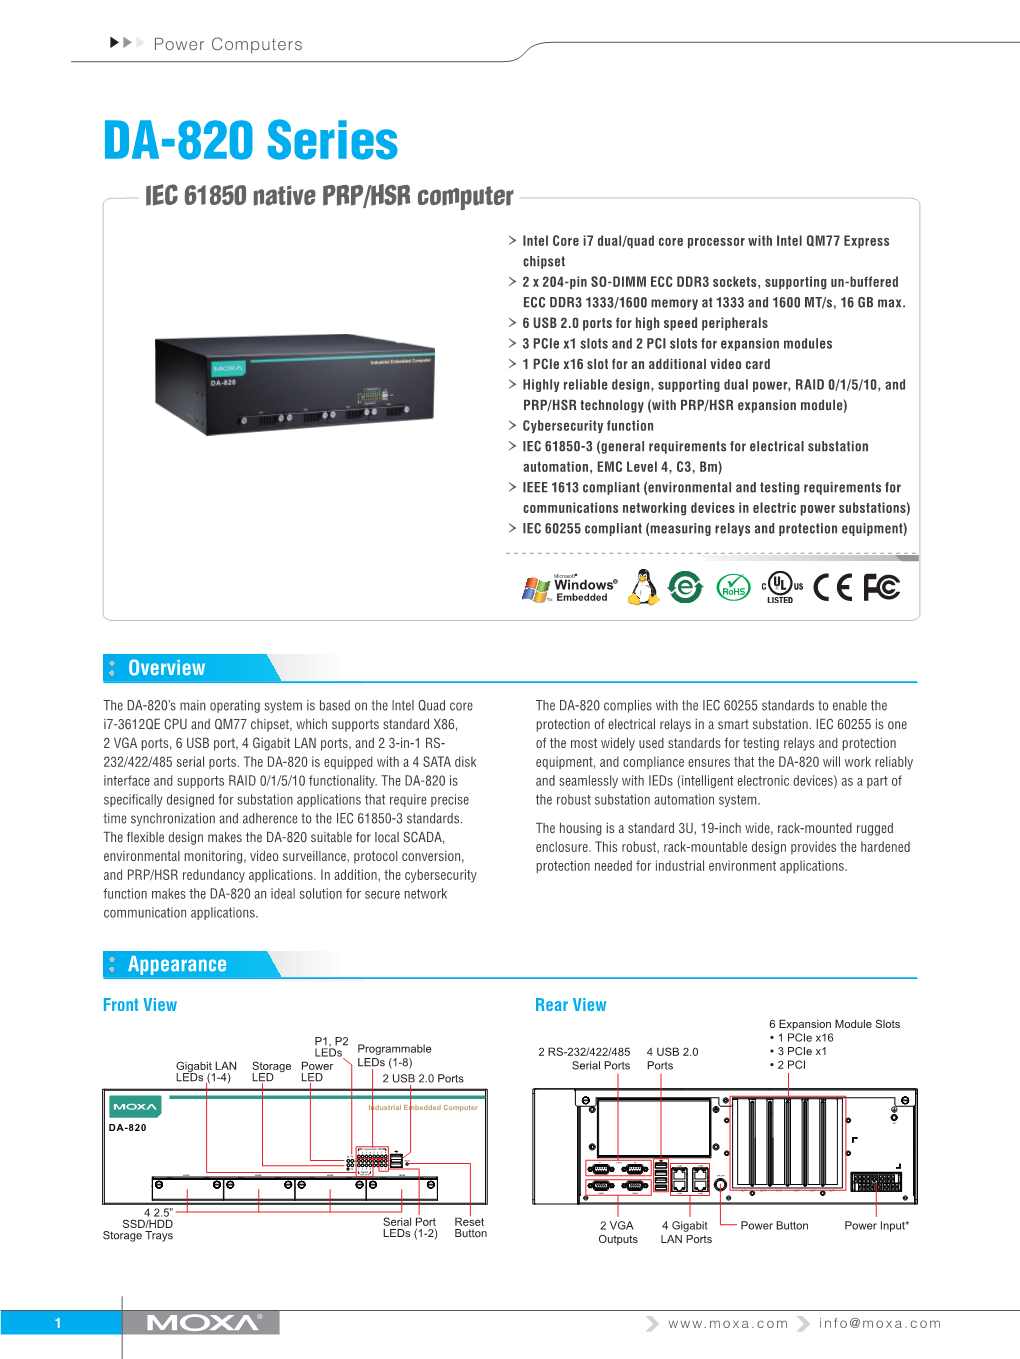 DA-820 Series IEC 61850 Native PRP/HSR Computer